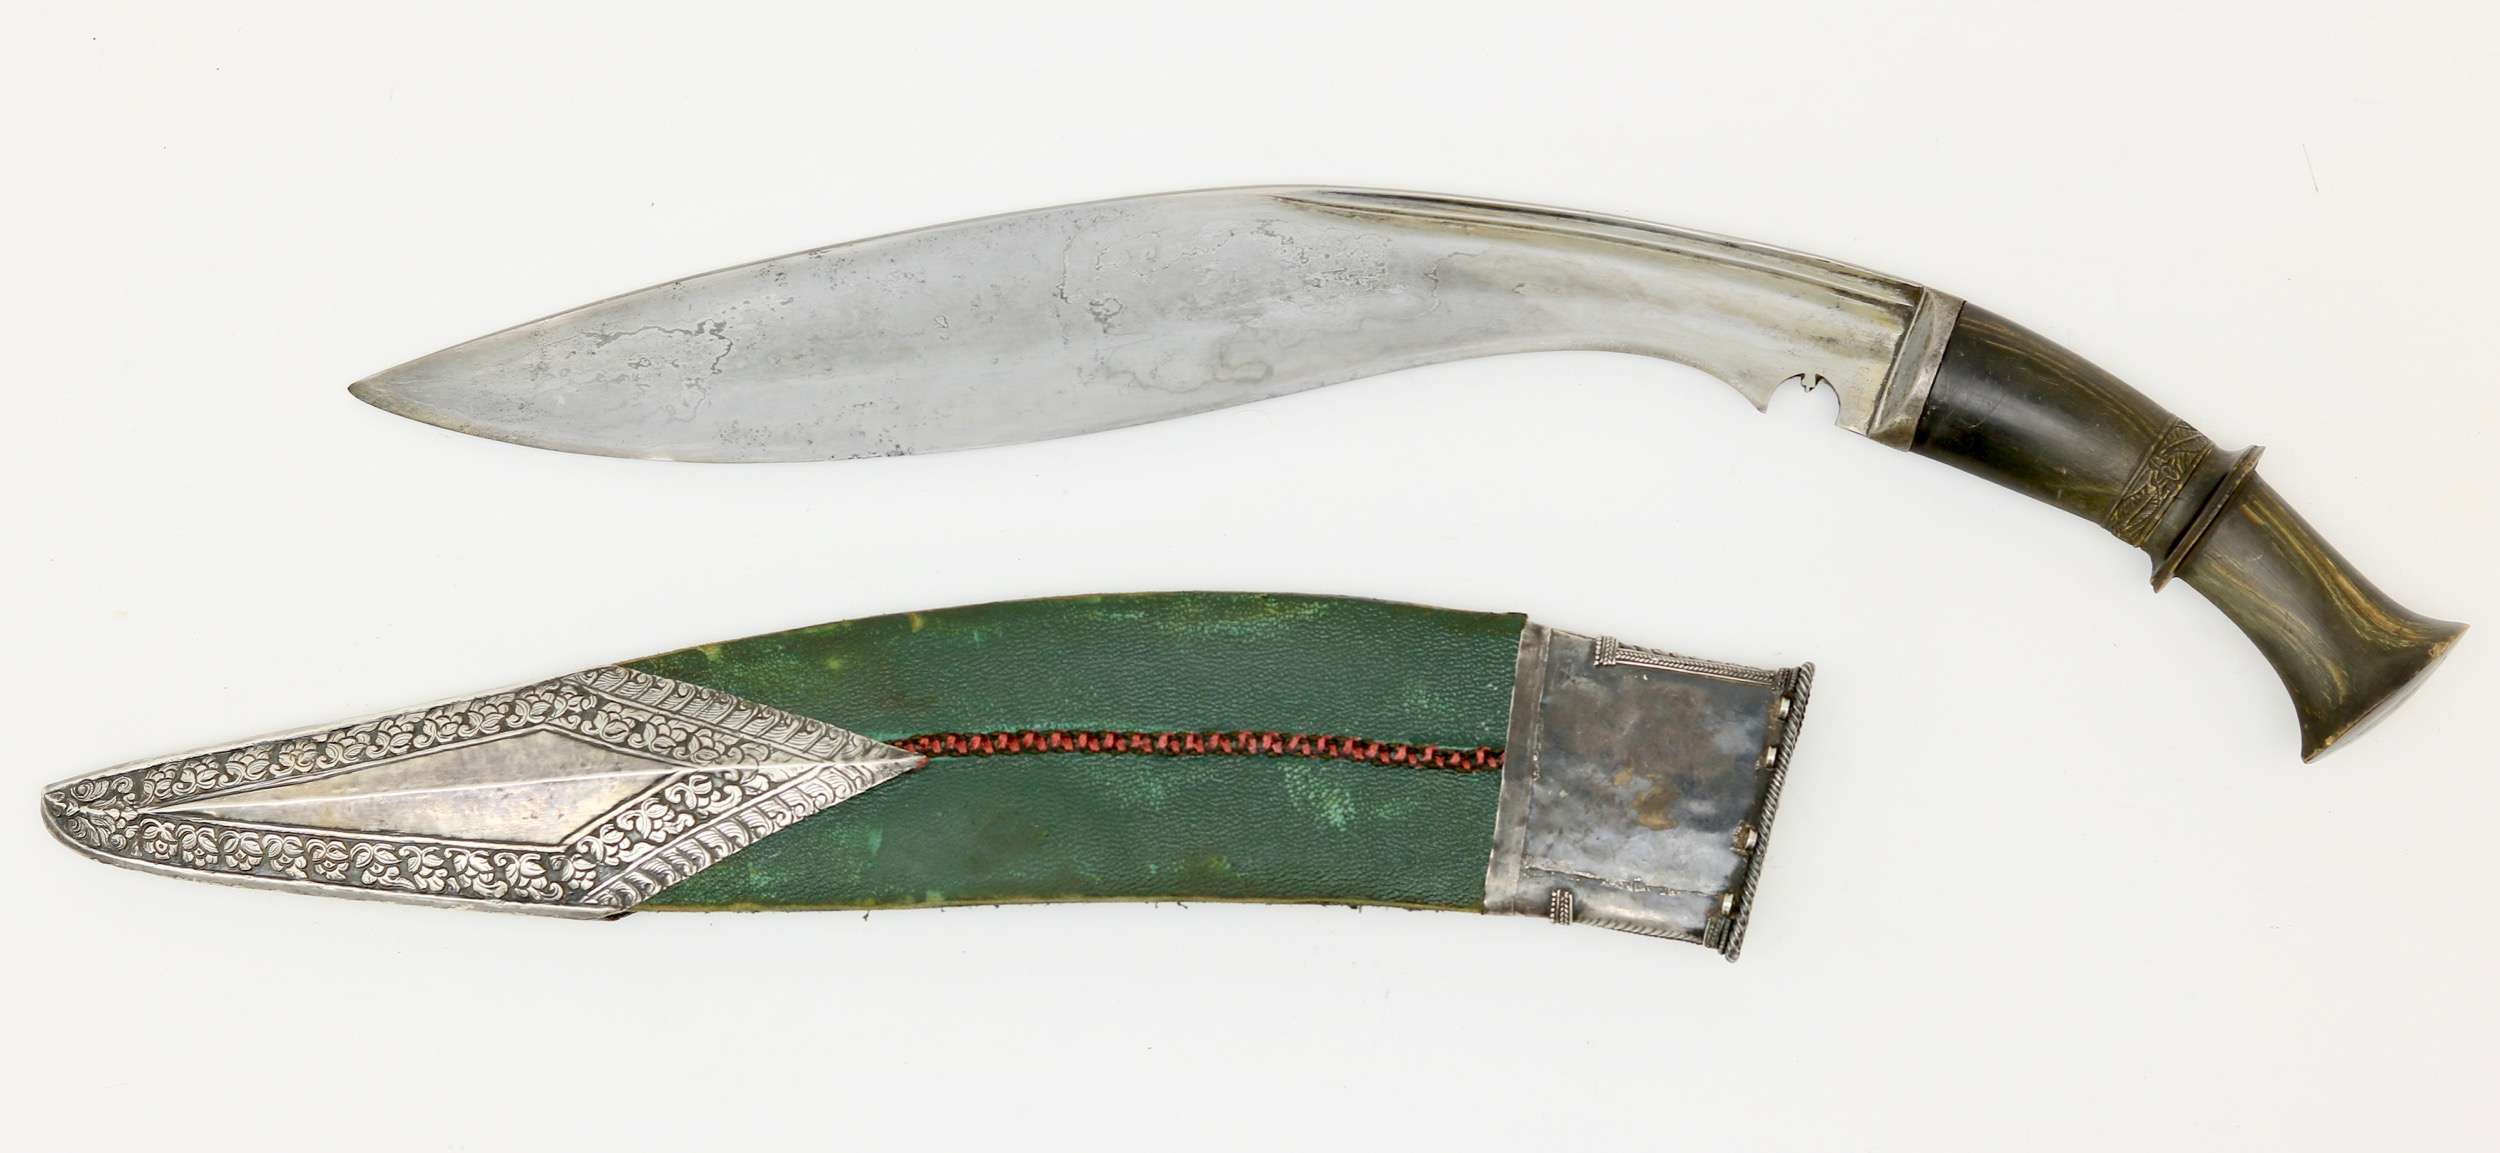 19th century silver mounted kukri